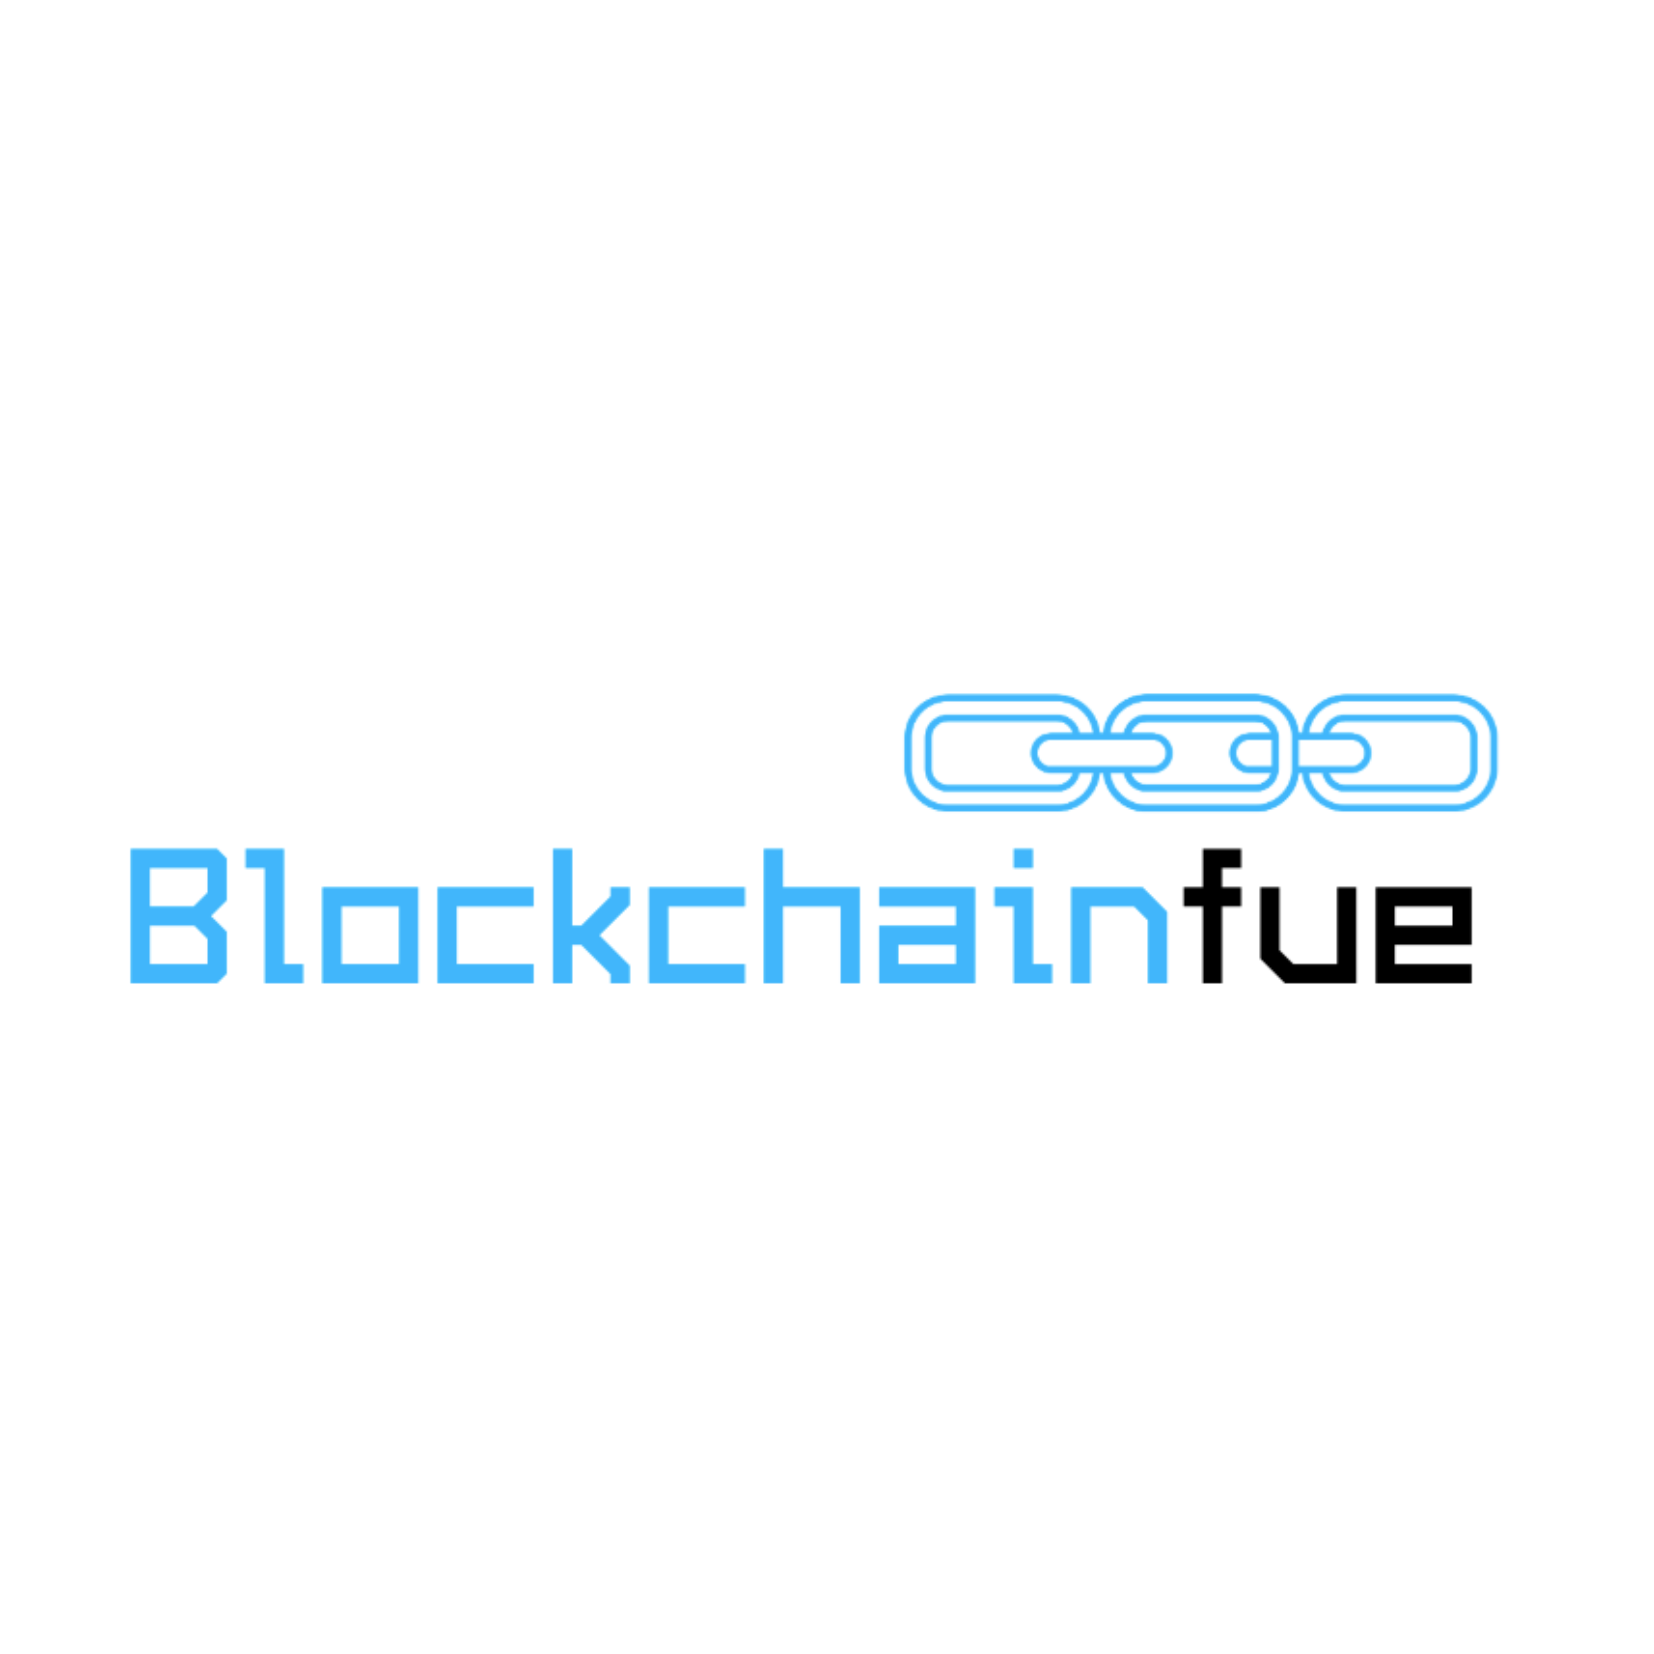 BlockchainFUE